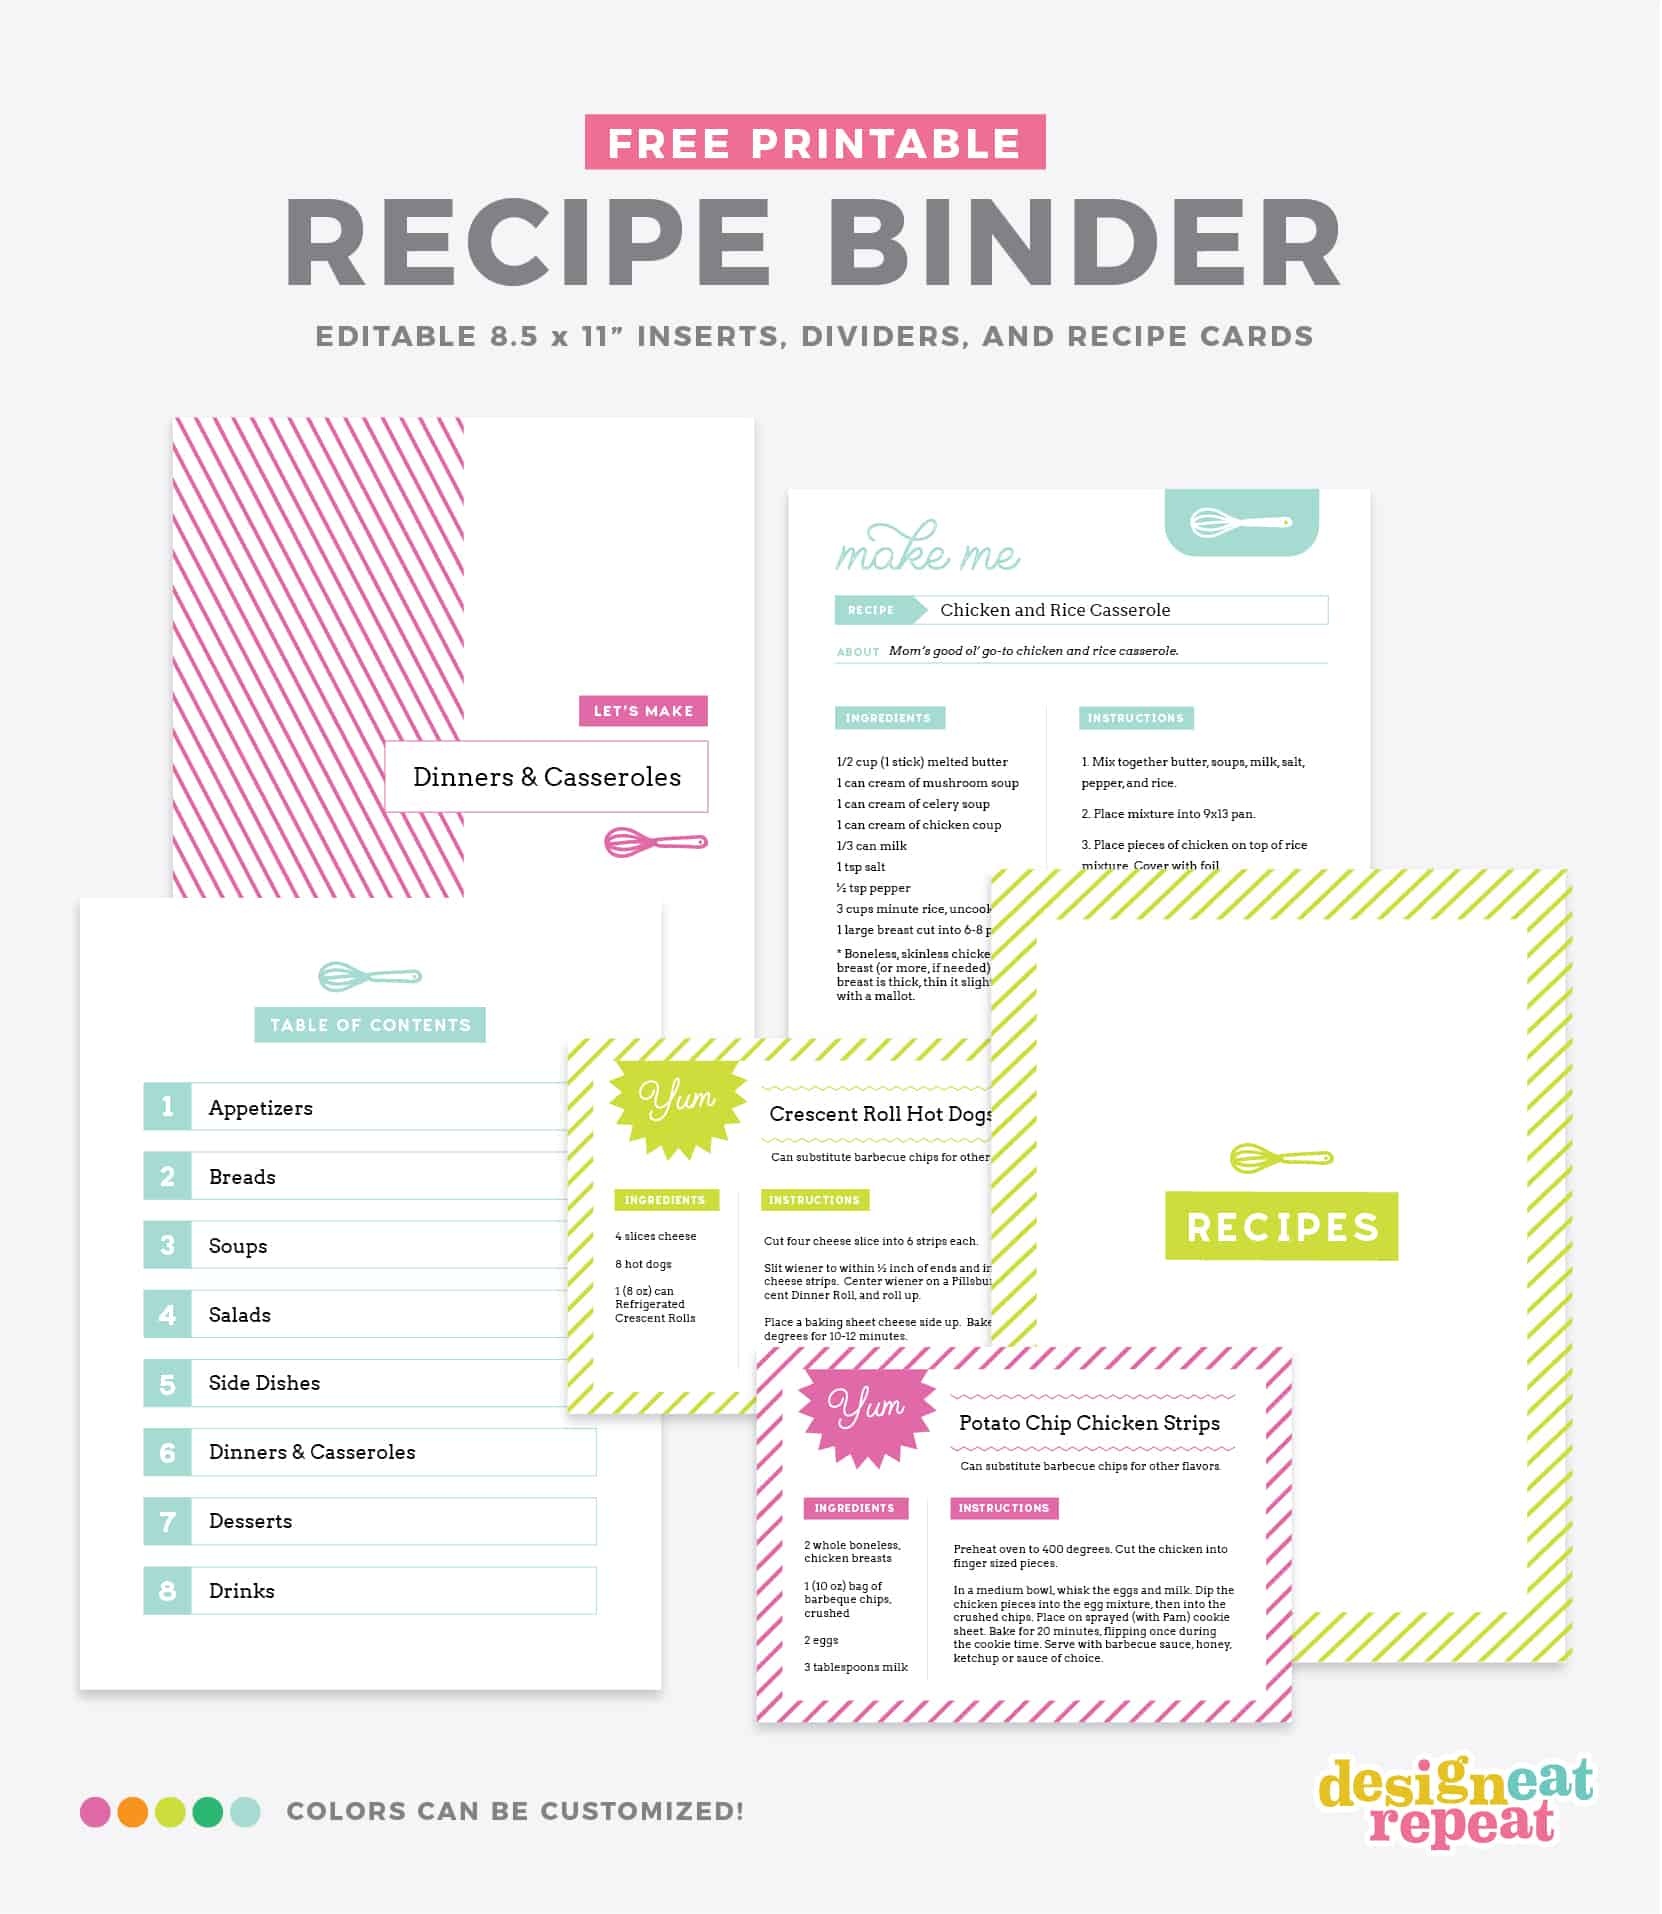 Diy Recipe Book (With Free Printable Recipe Binder Kit!) - Create Your Own Free Printable Cookbook